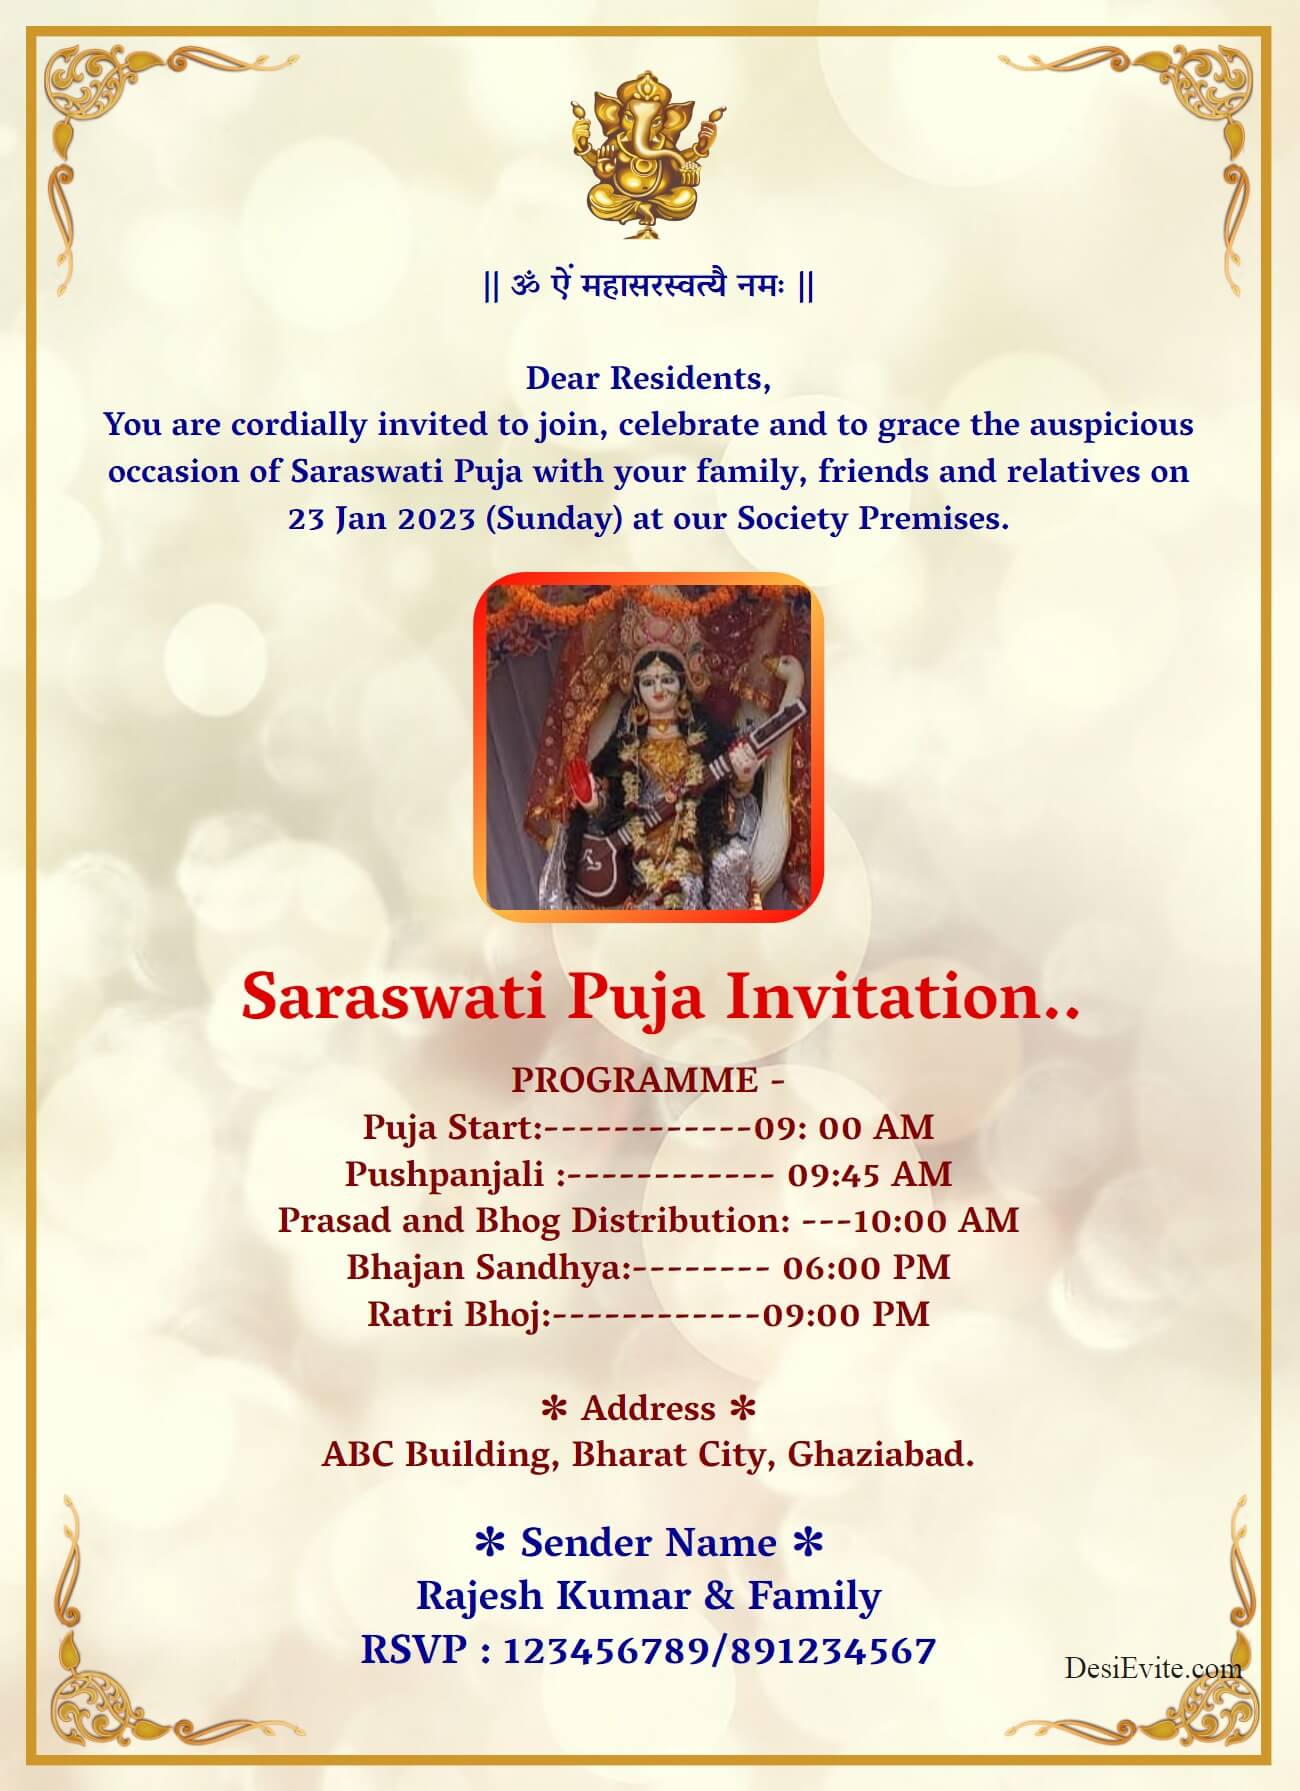 saraswati puja card with golden border 34 